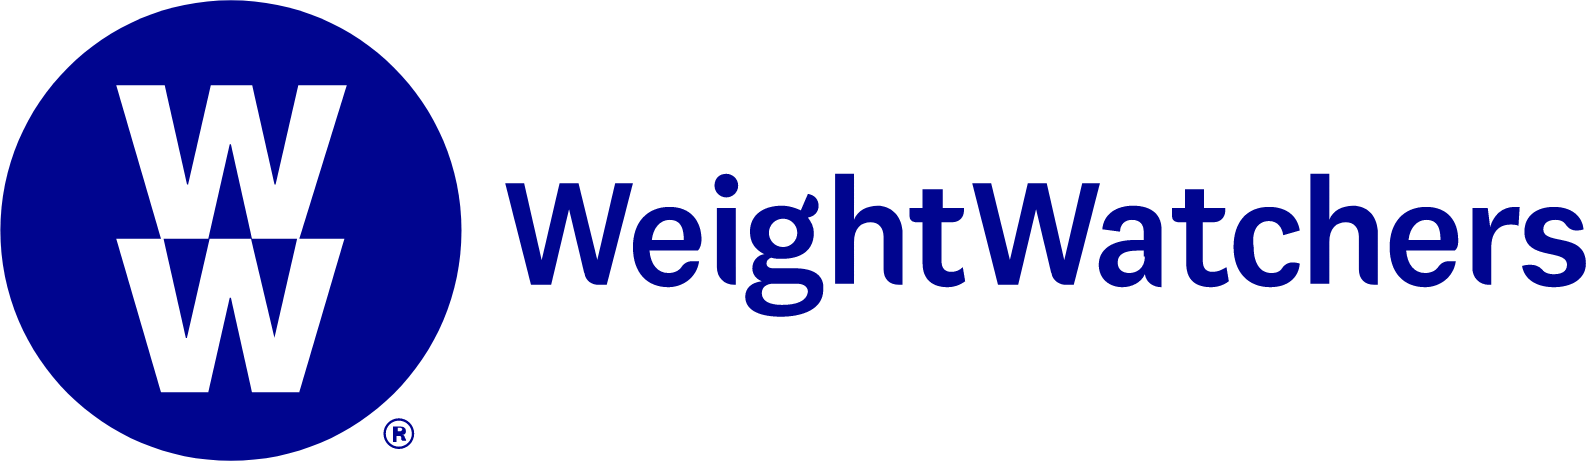 Weight Watchers logo large (transparent PNG)